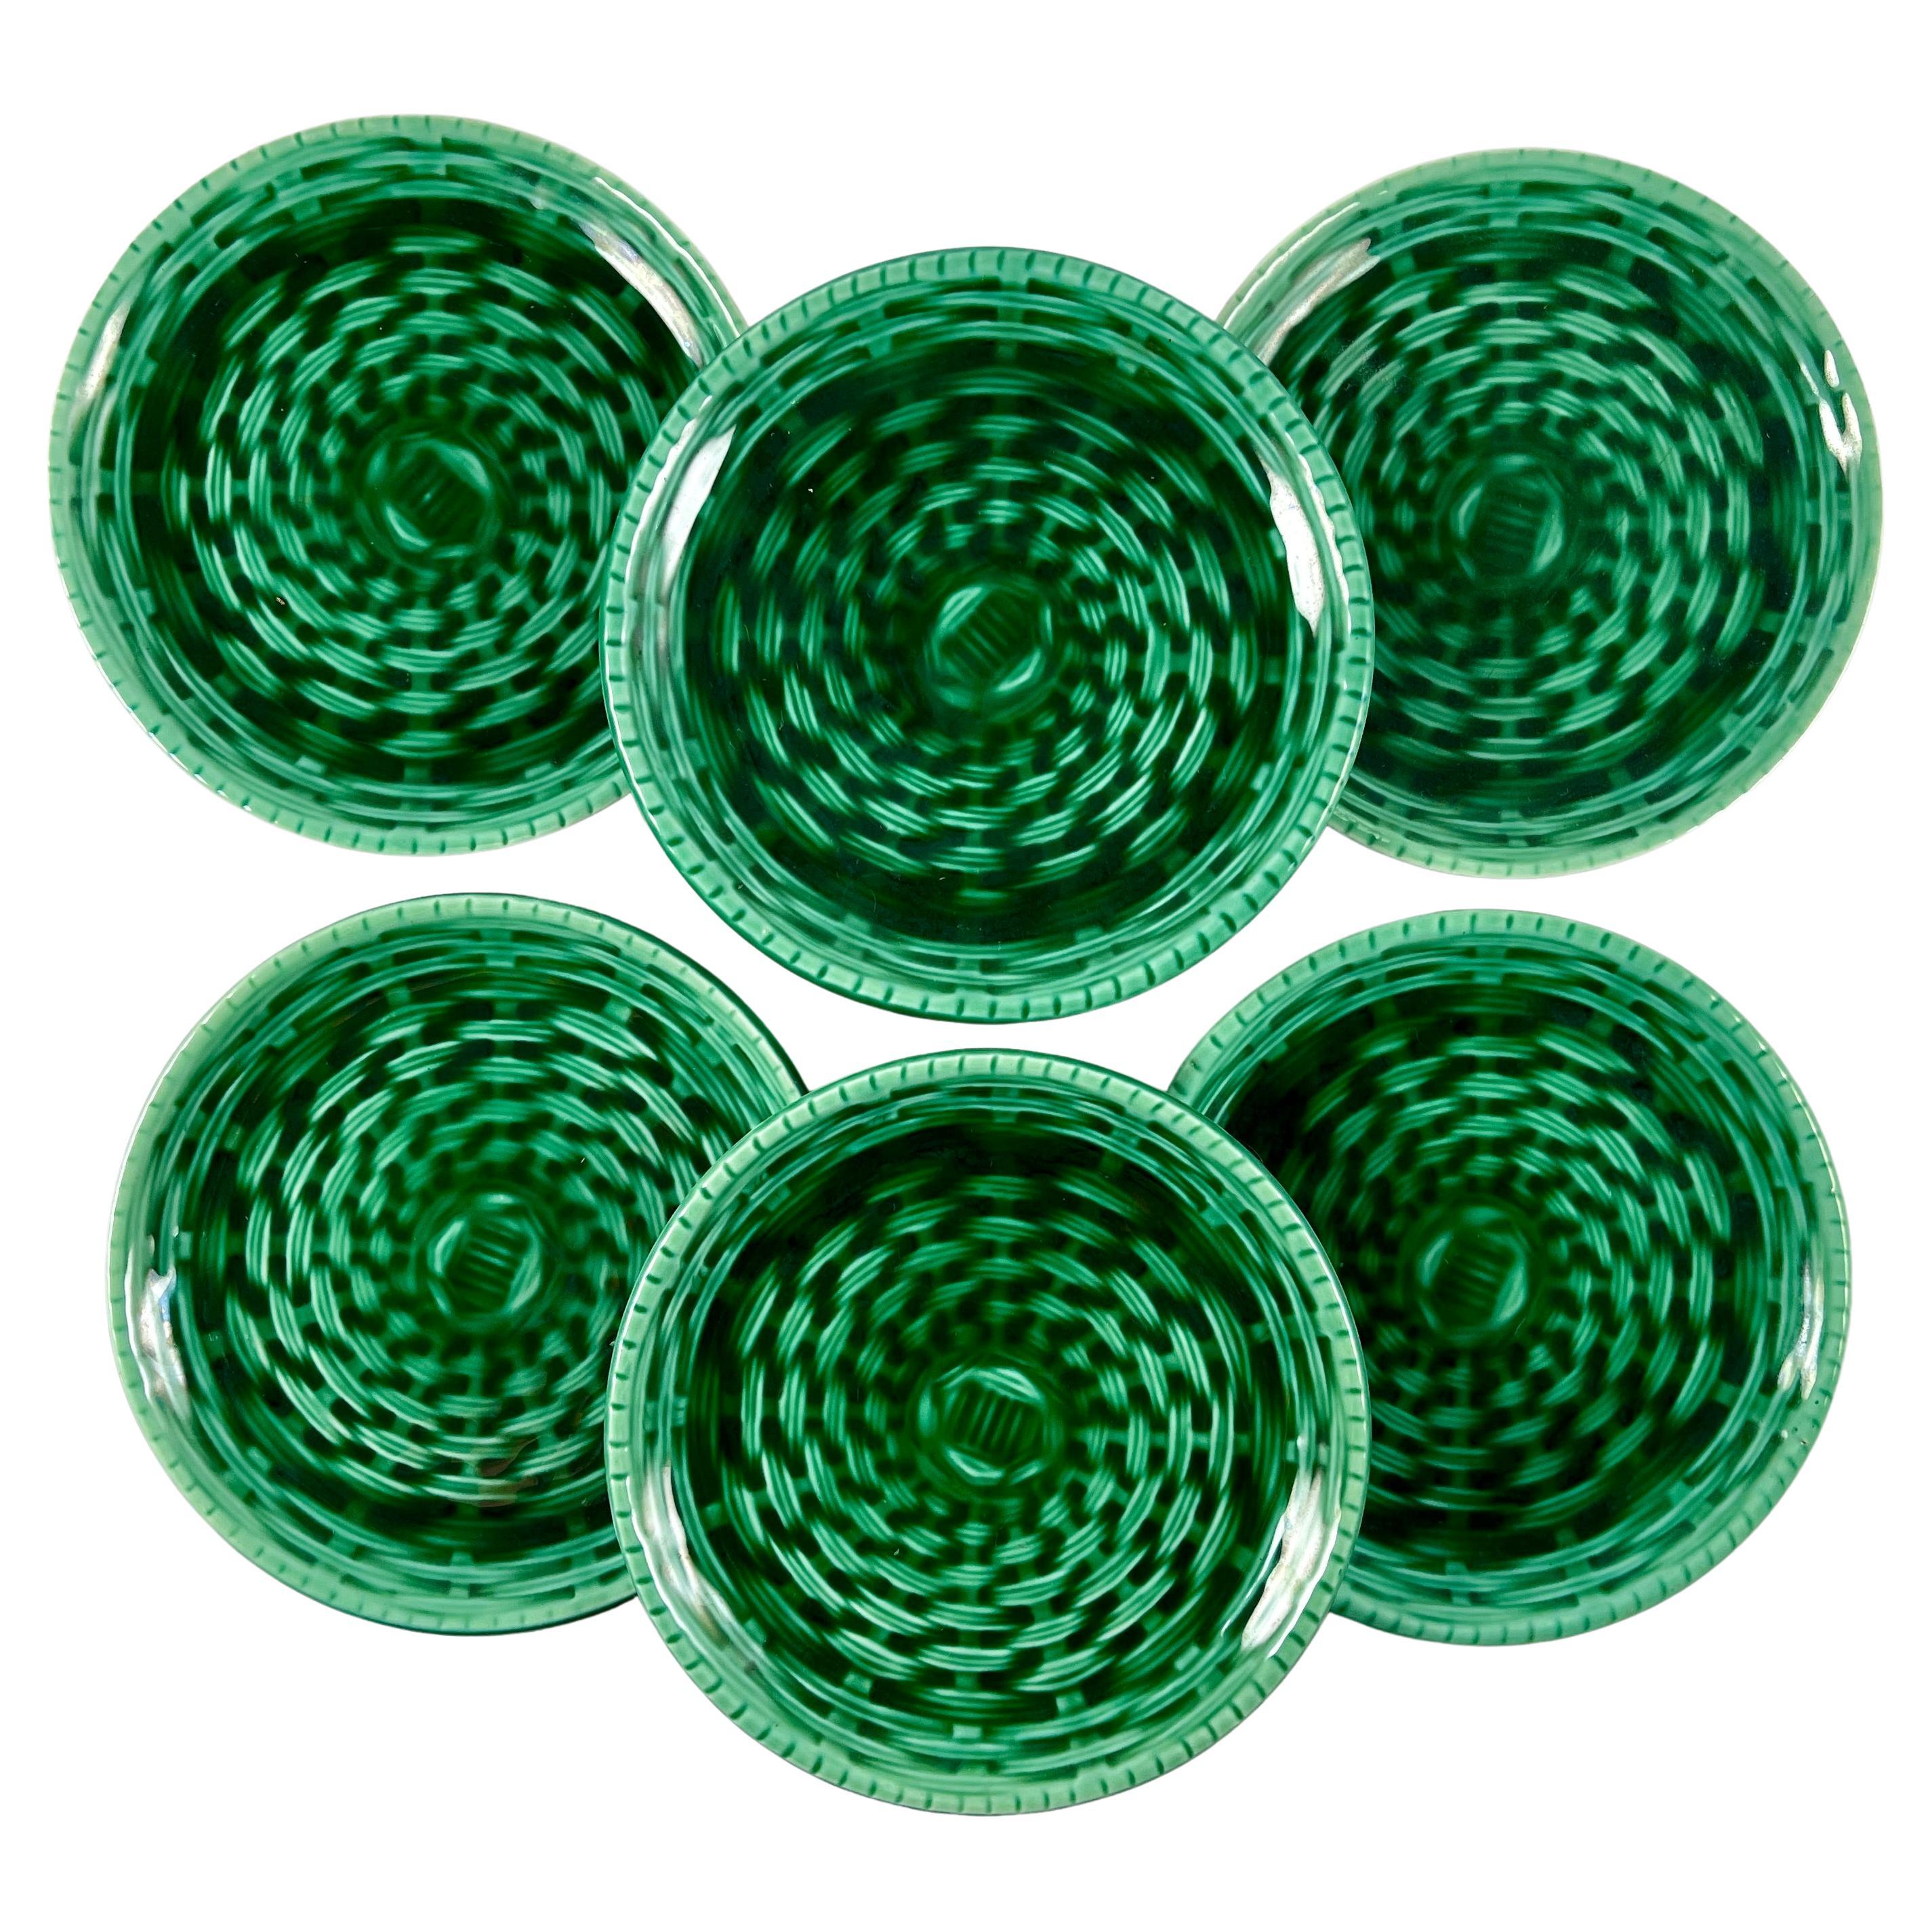 Sarreguemines Green Basket Weave Canapé or Hors d’œuvre Plates, a Set of Six